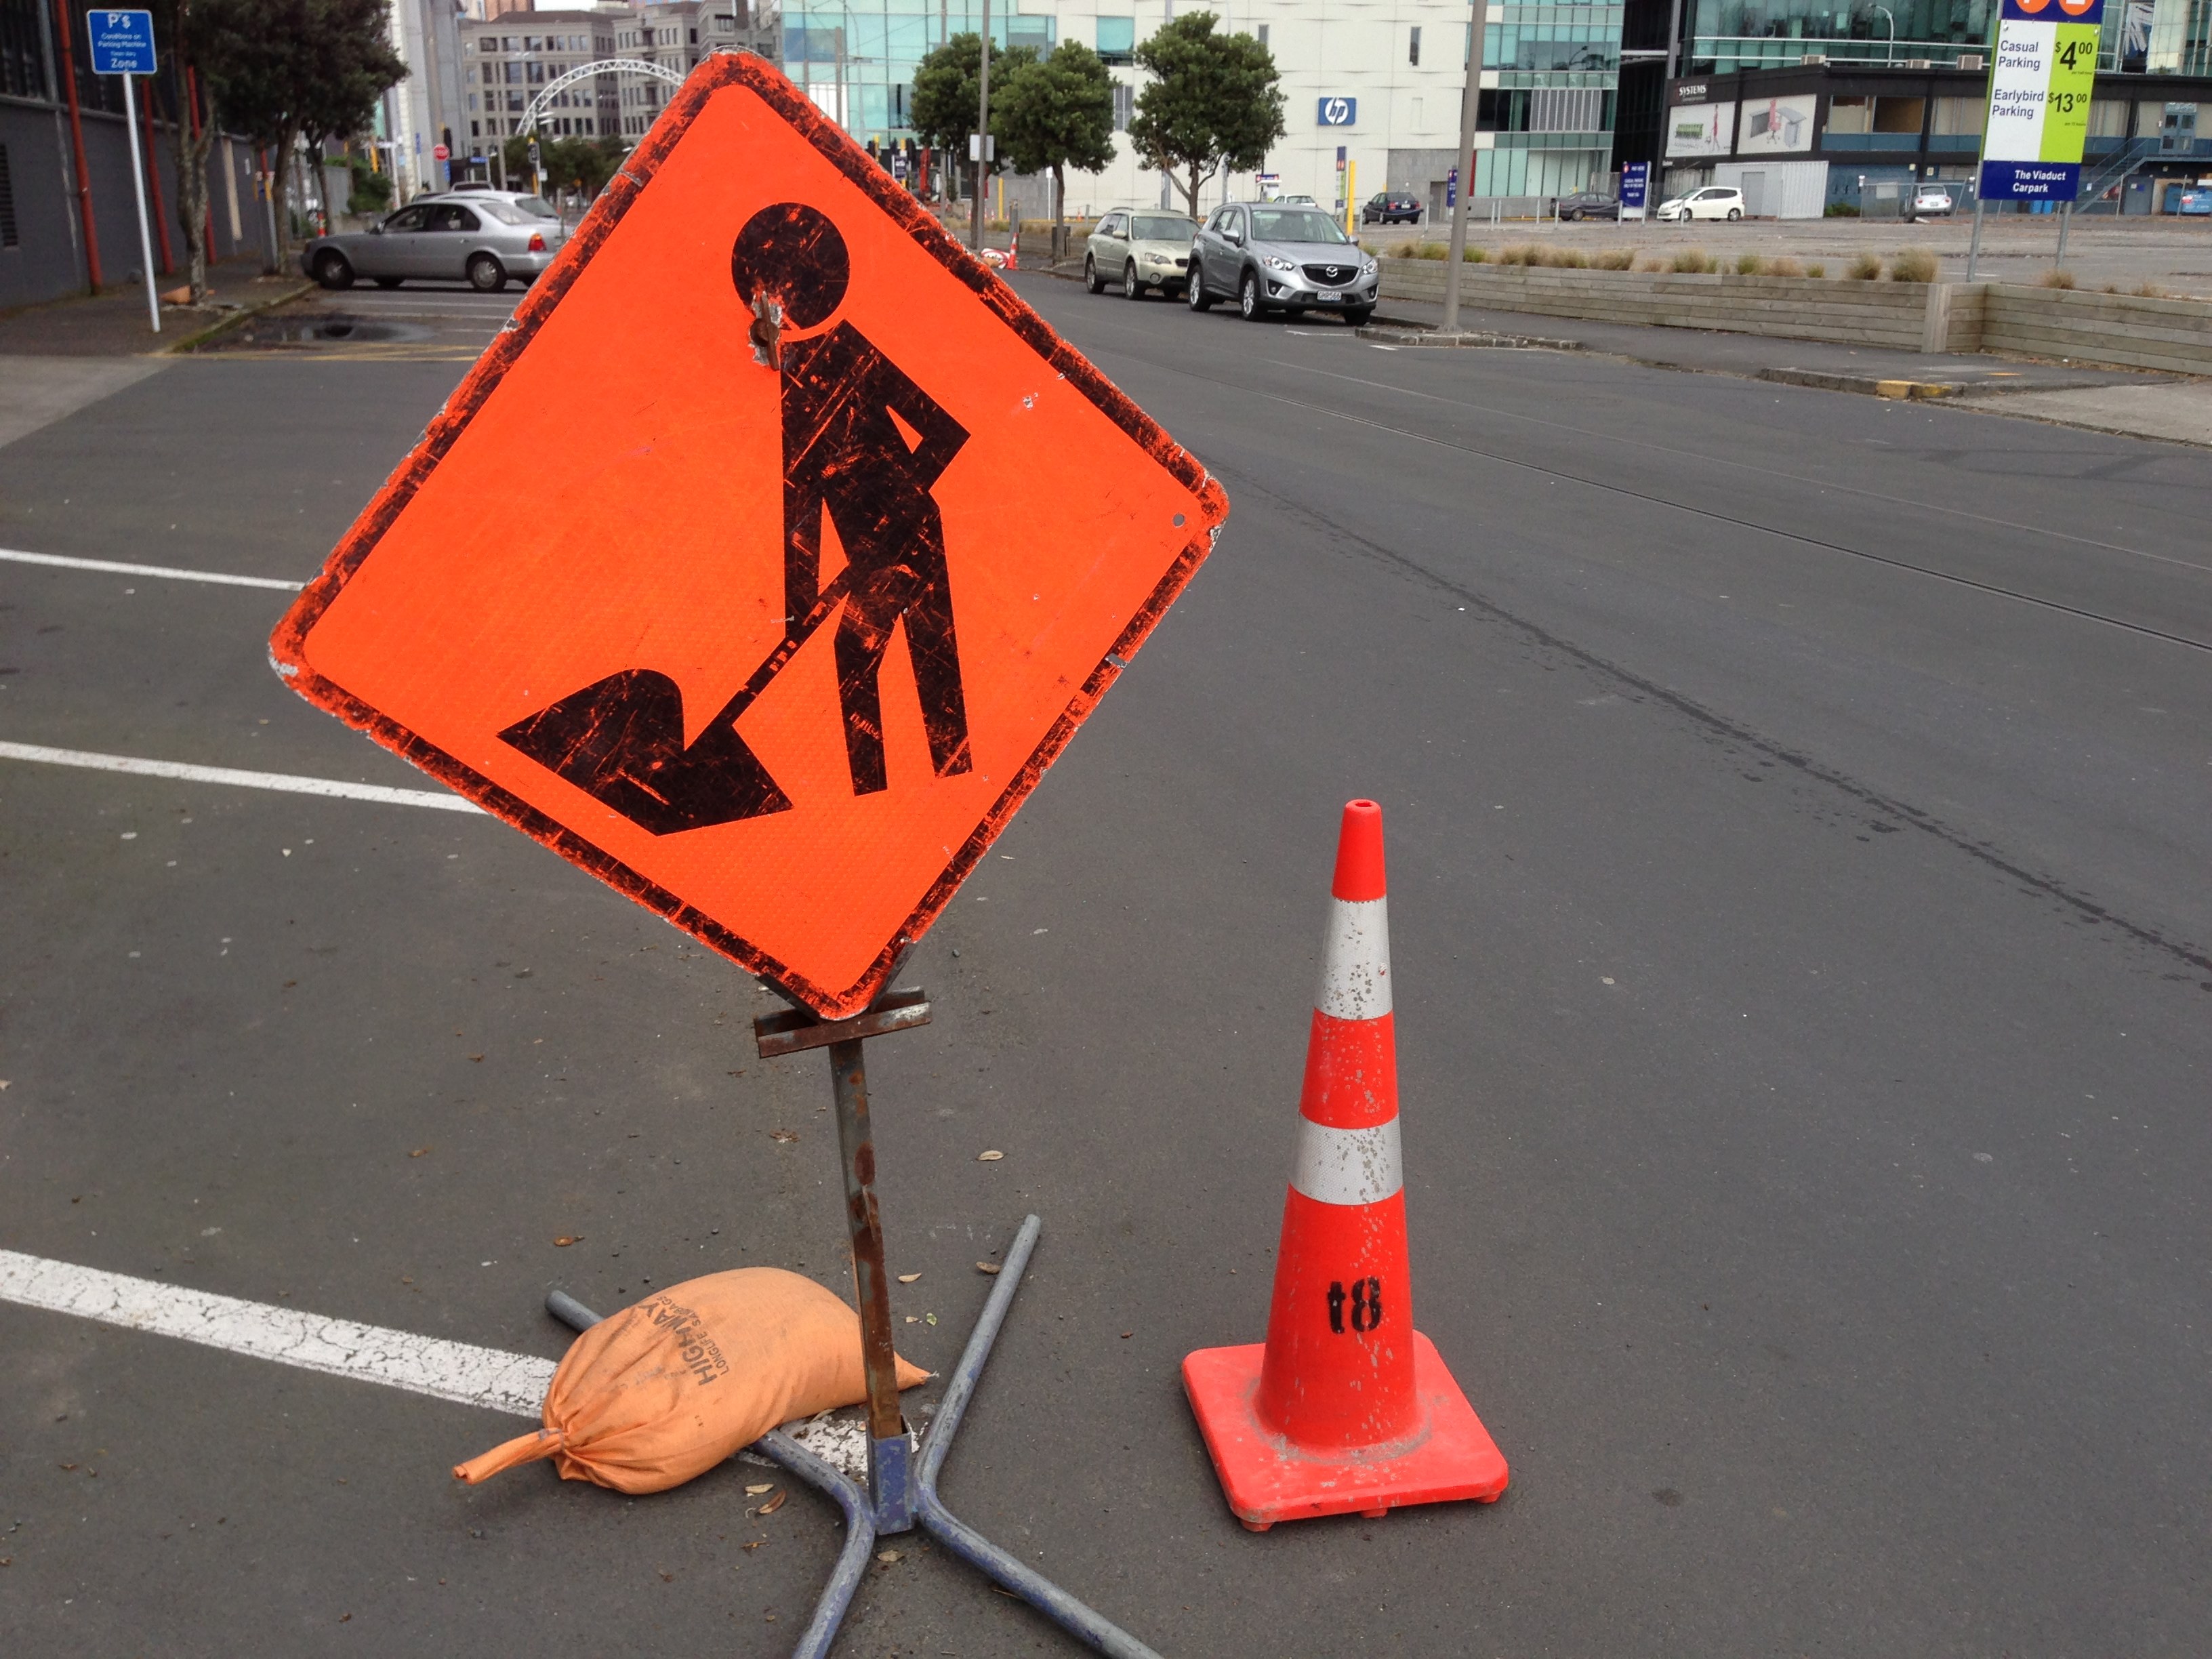 File:Roadworks sign.JPG - Wikimedia Commons